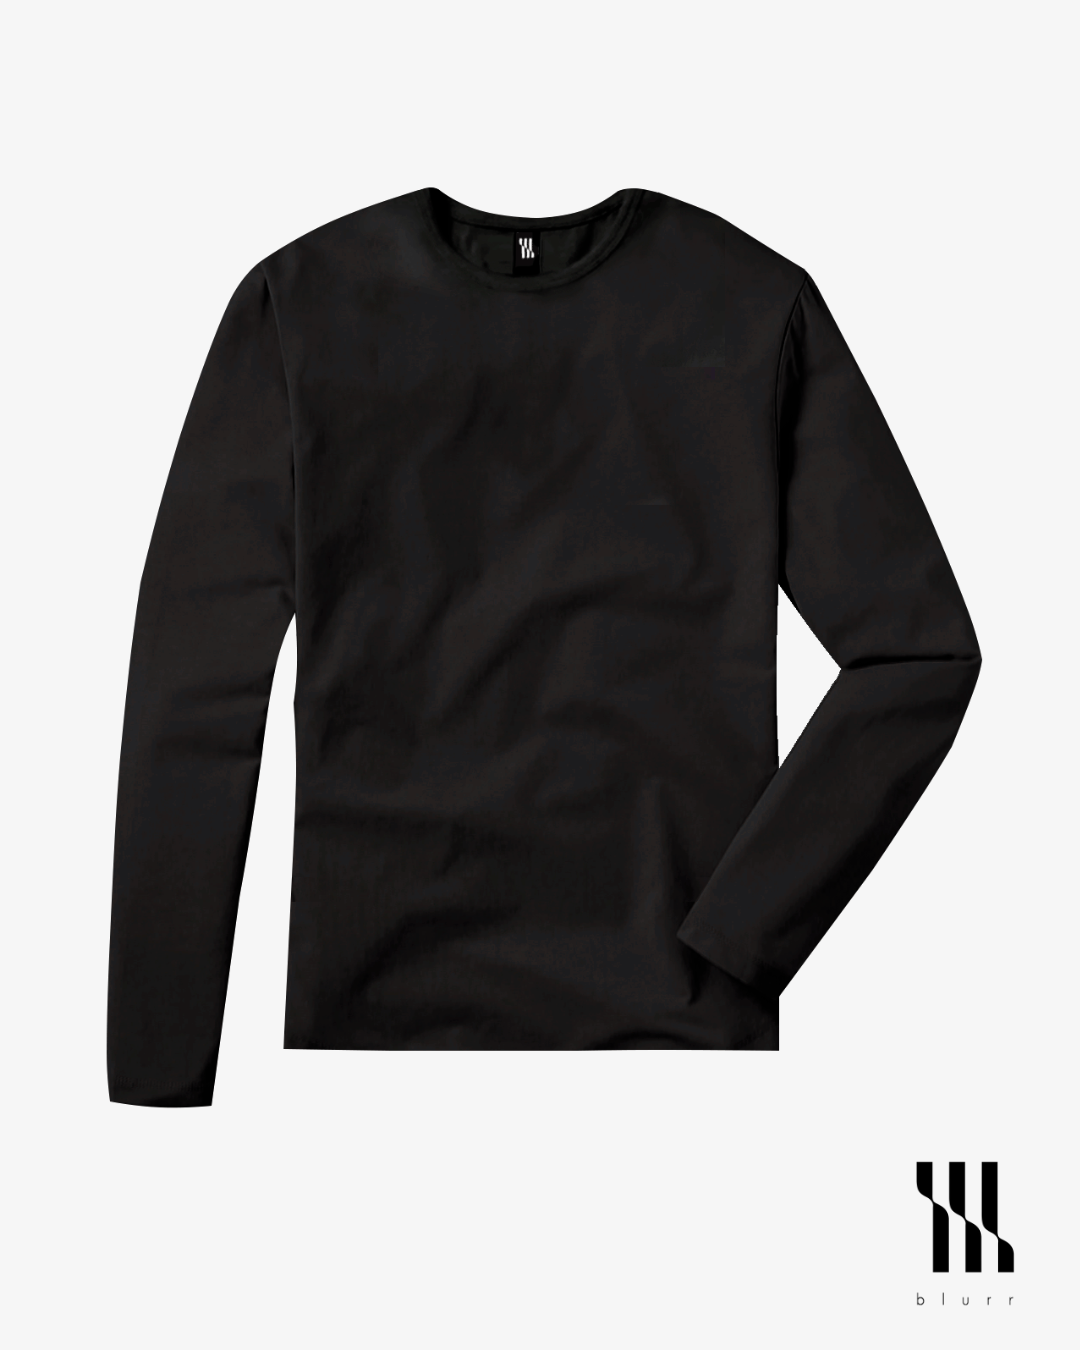 Black T-shirt - Long Sleeve Crew Neck Straight Bottom